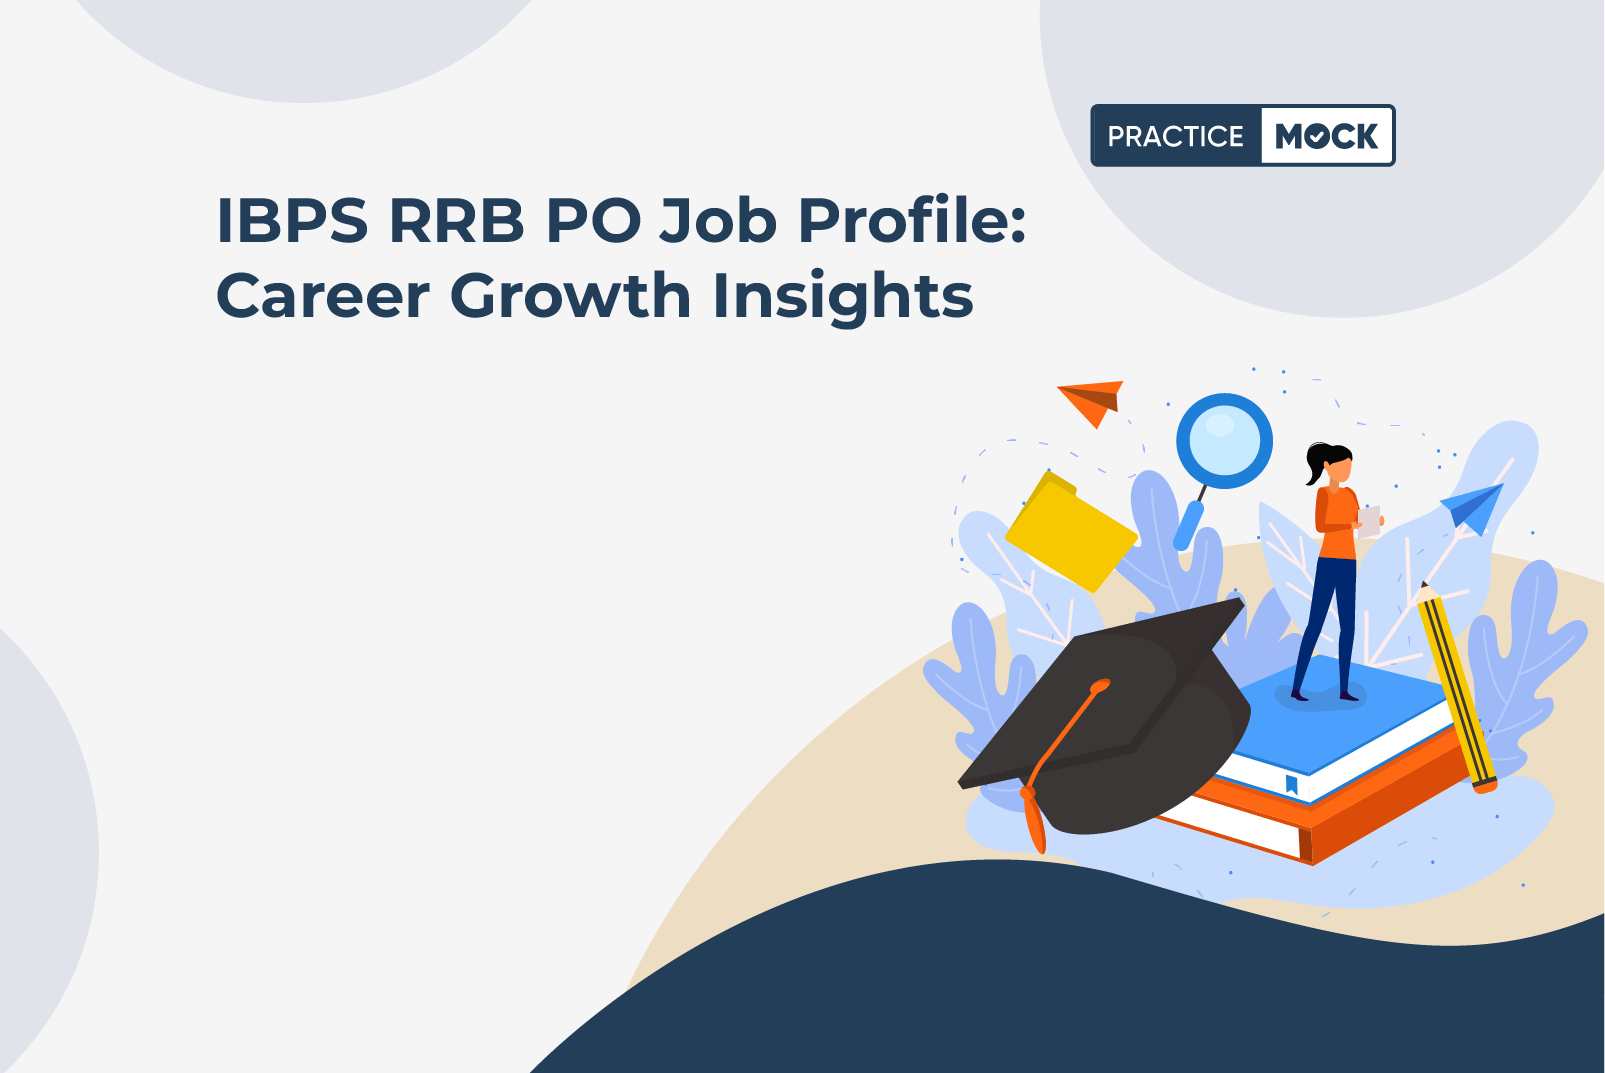 IBPS RRB PO Job Profile: Career Growth Insights